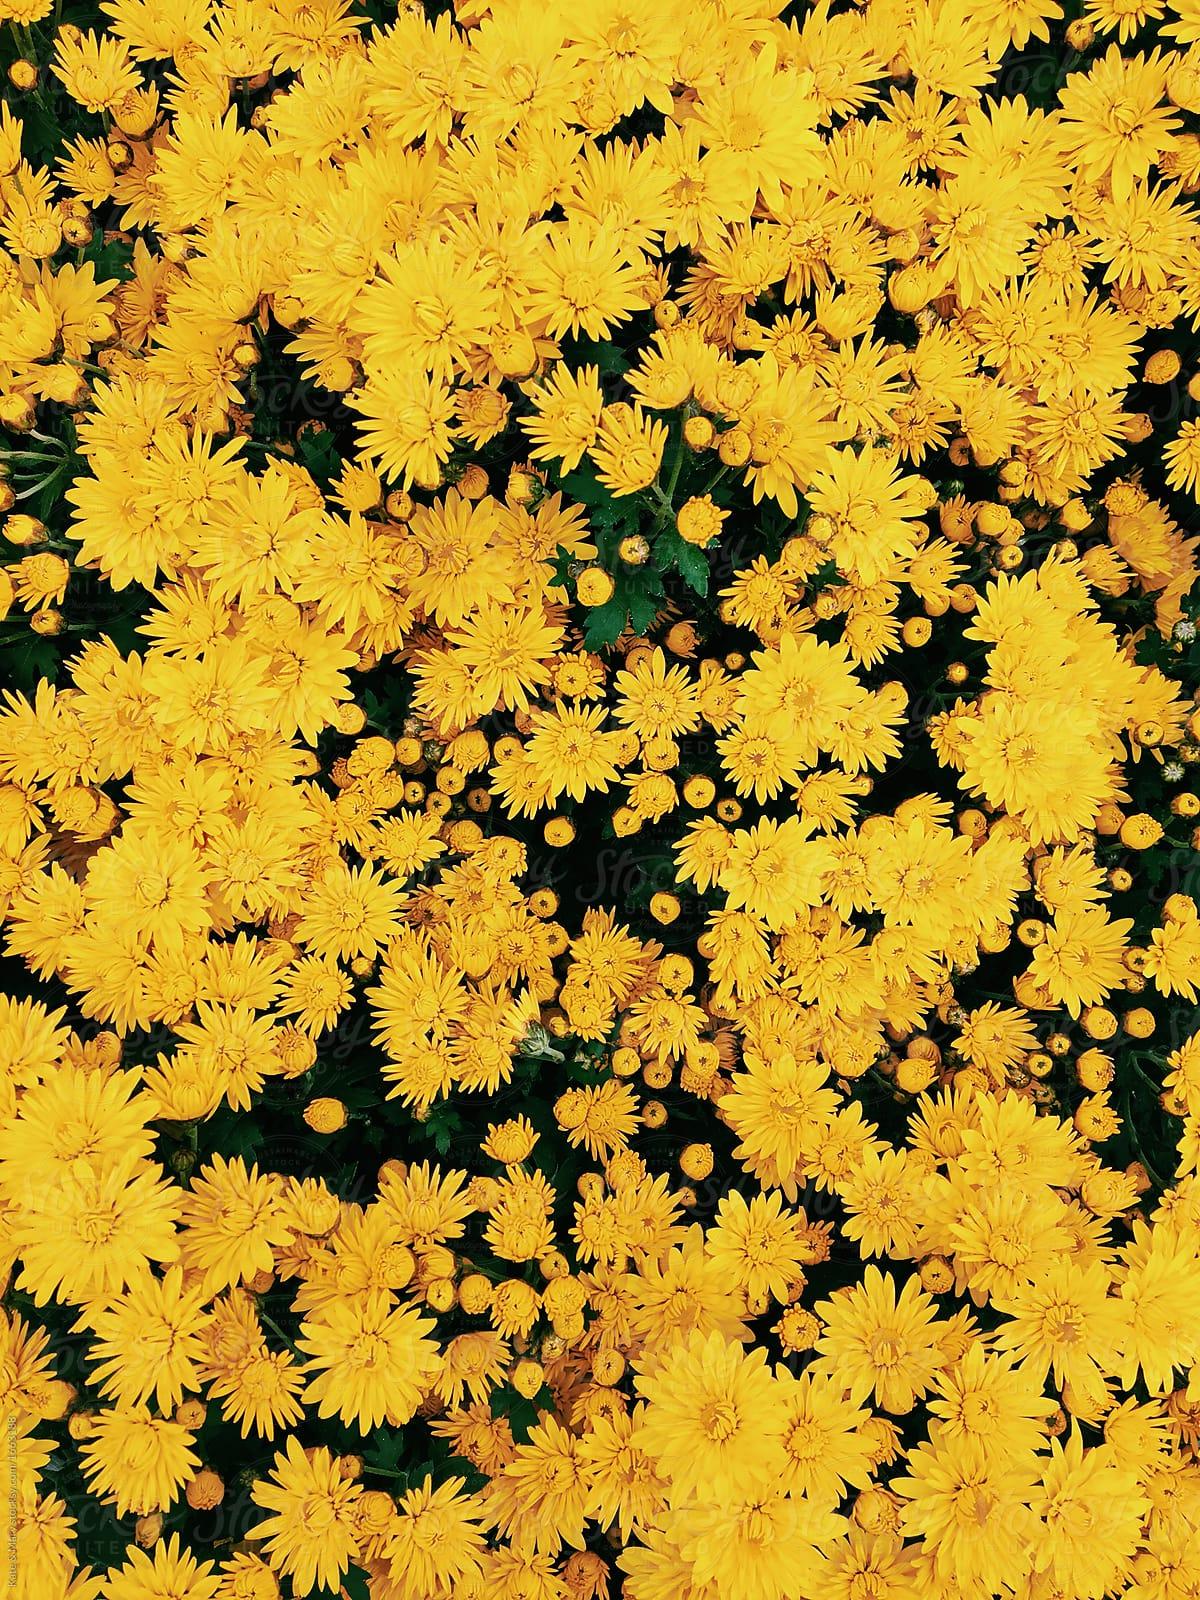 Wallpaper of autumn flowers